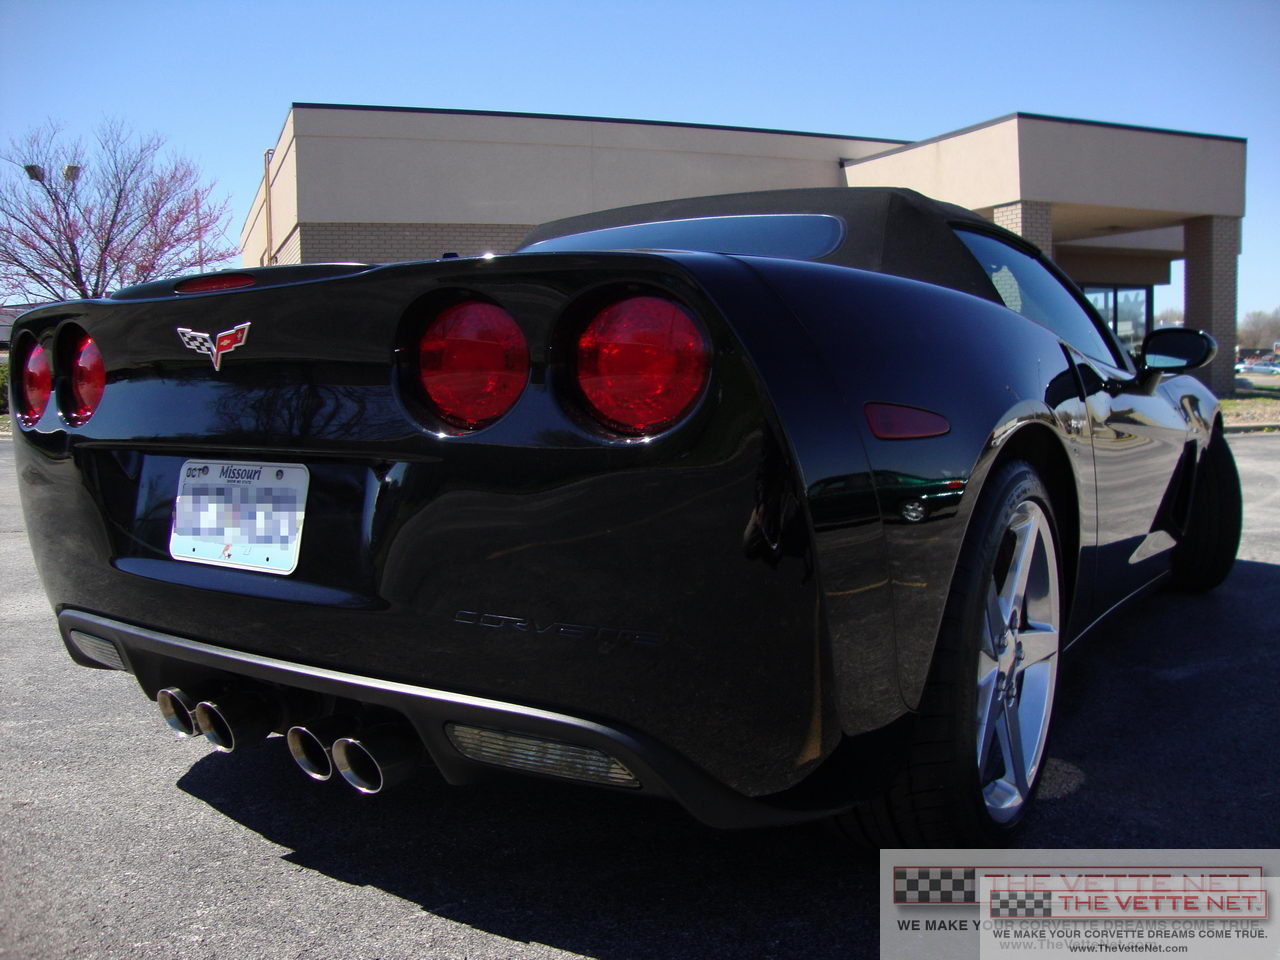 2005 Corvette Convertible Black